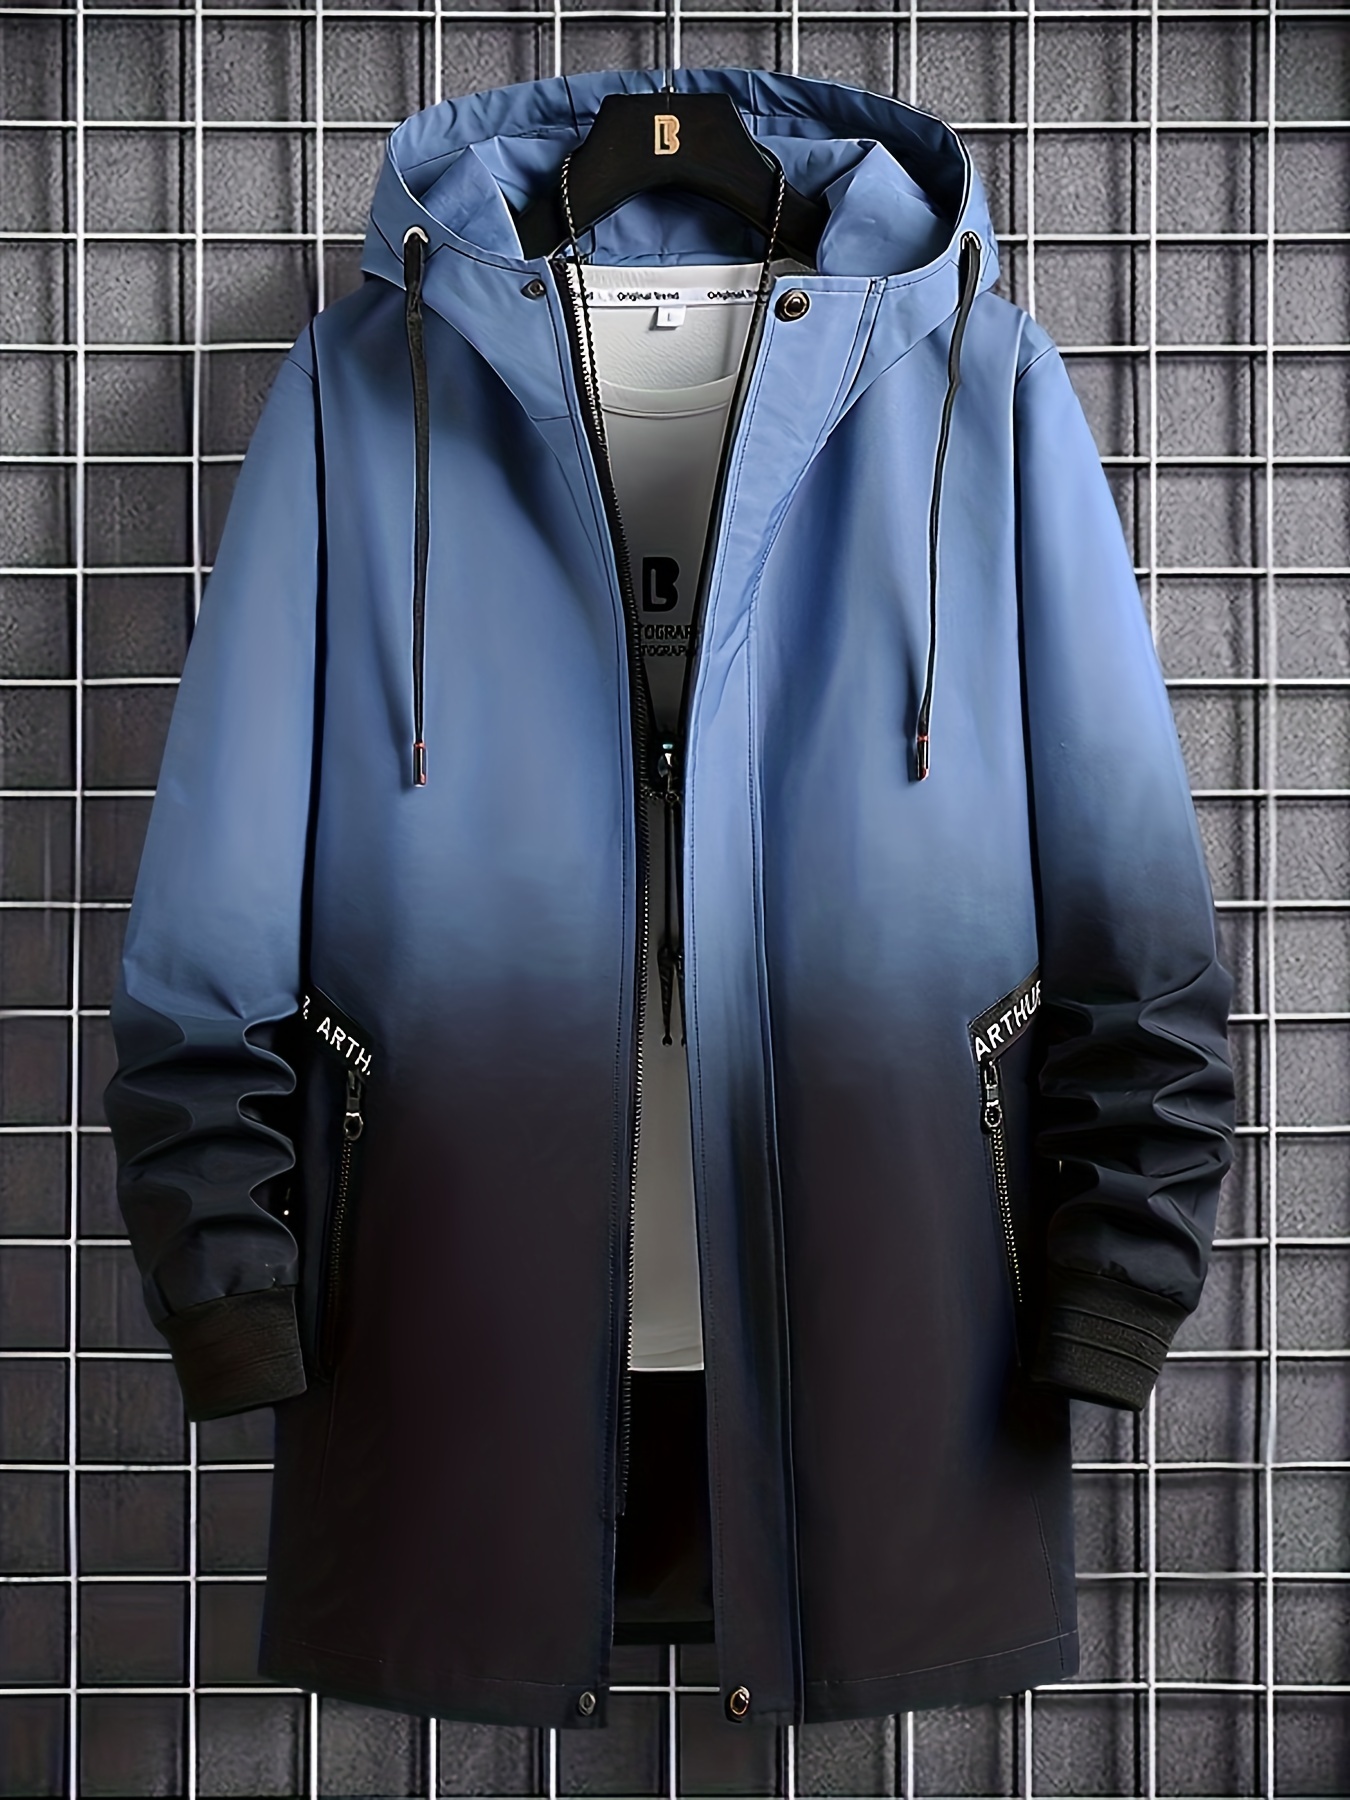 Dtydtpe Winter Jackets for Men, Men's Autumn&Winter Solid Color